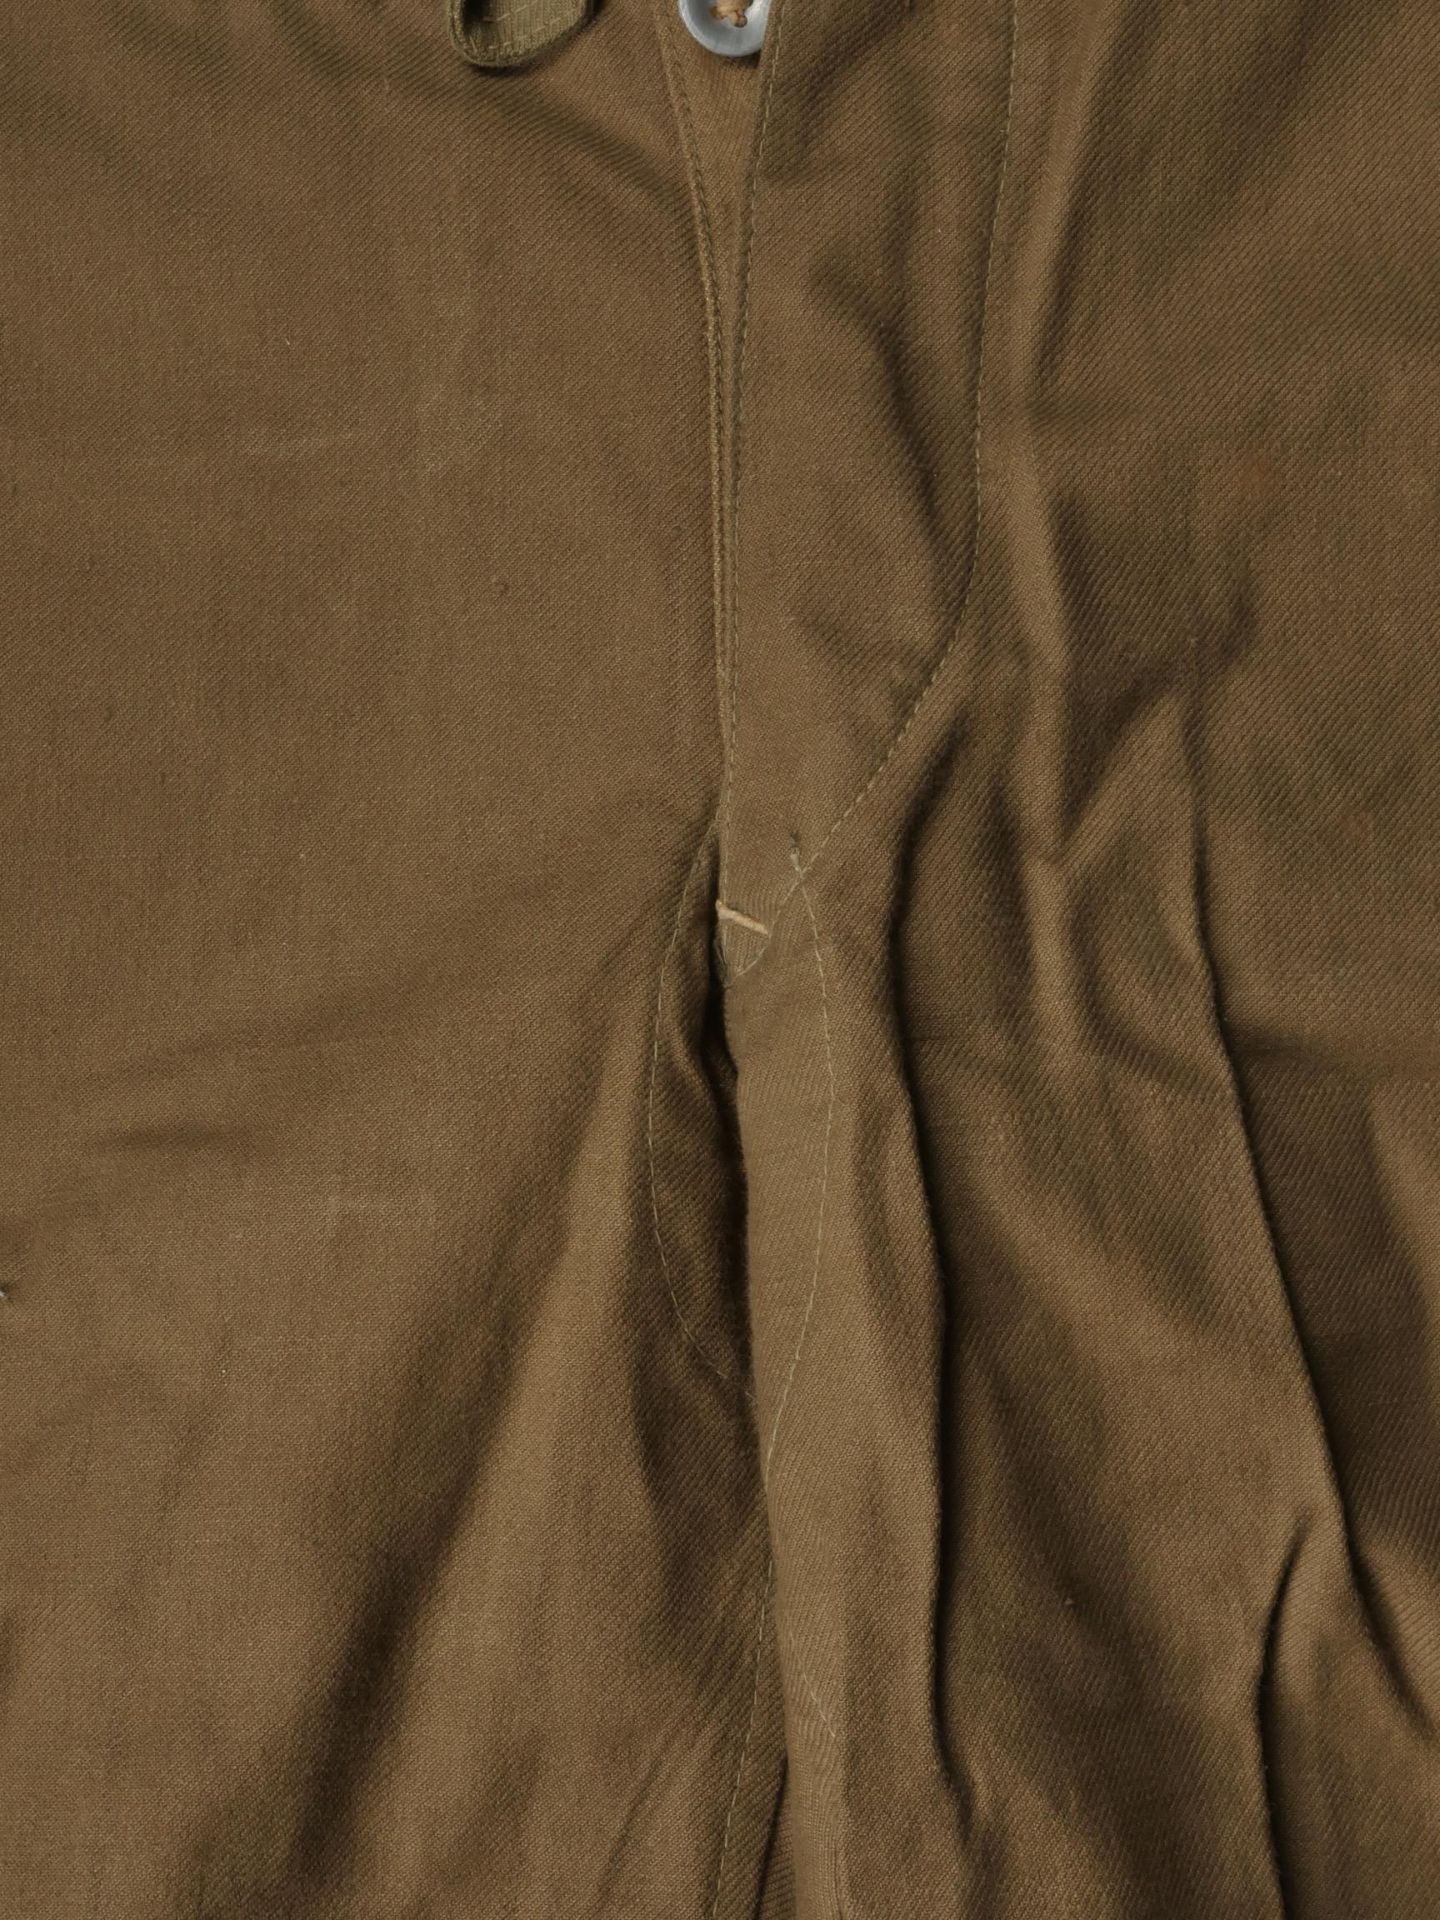 Pantalon tropical allemand. German tropical pants.  - Image 2 of 5